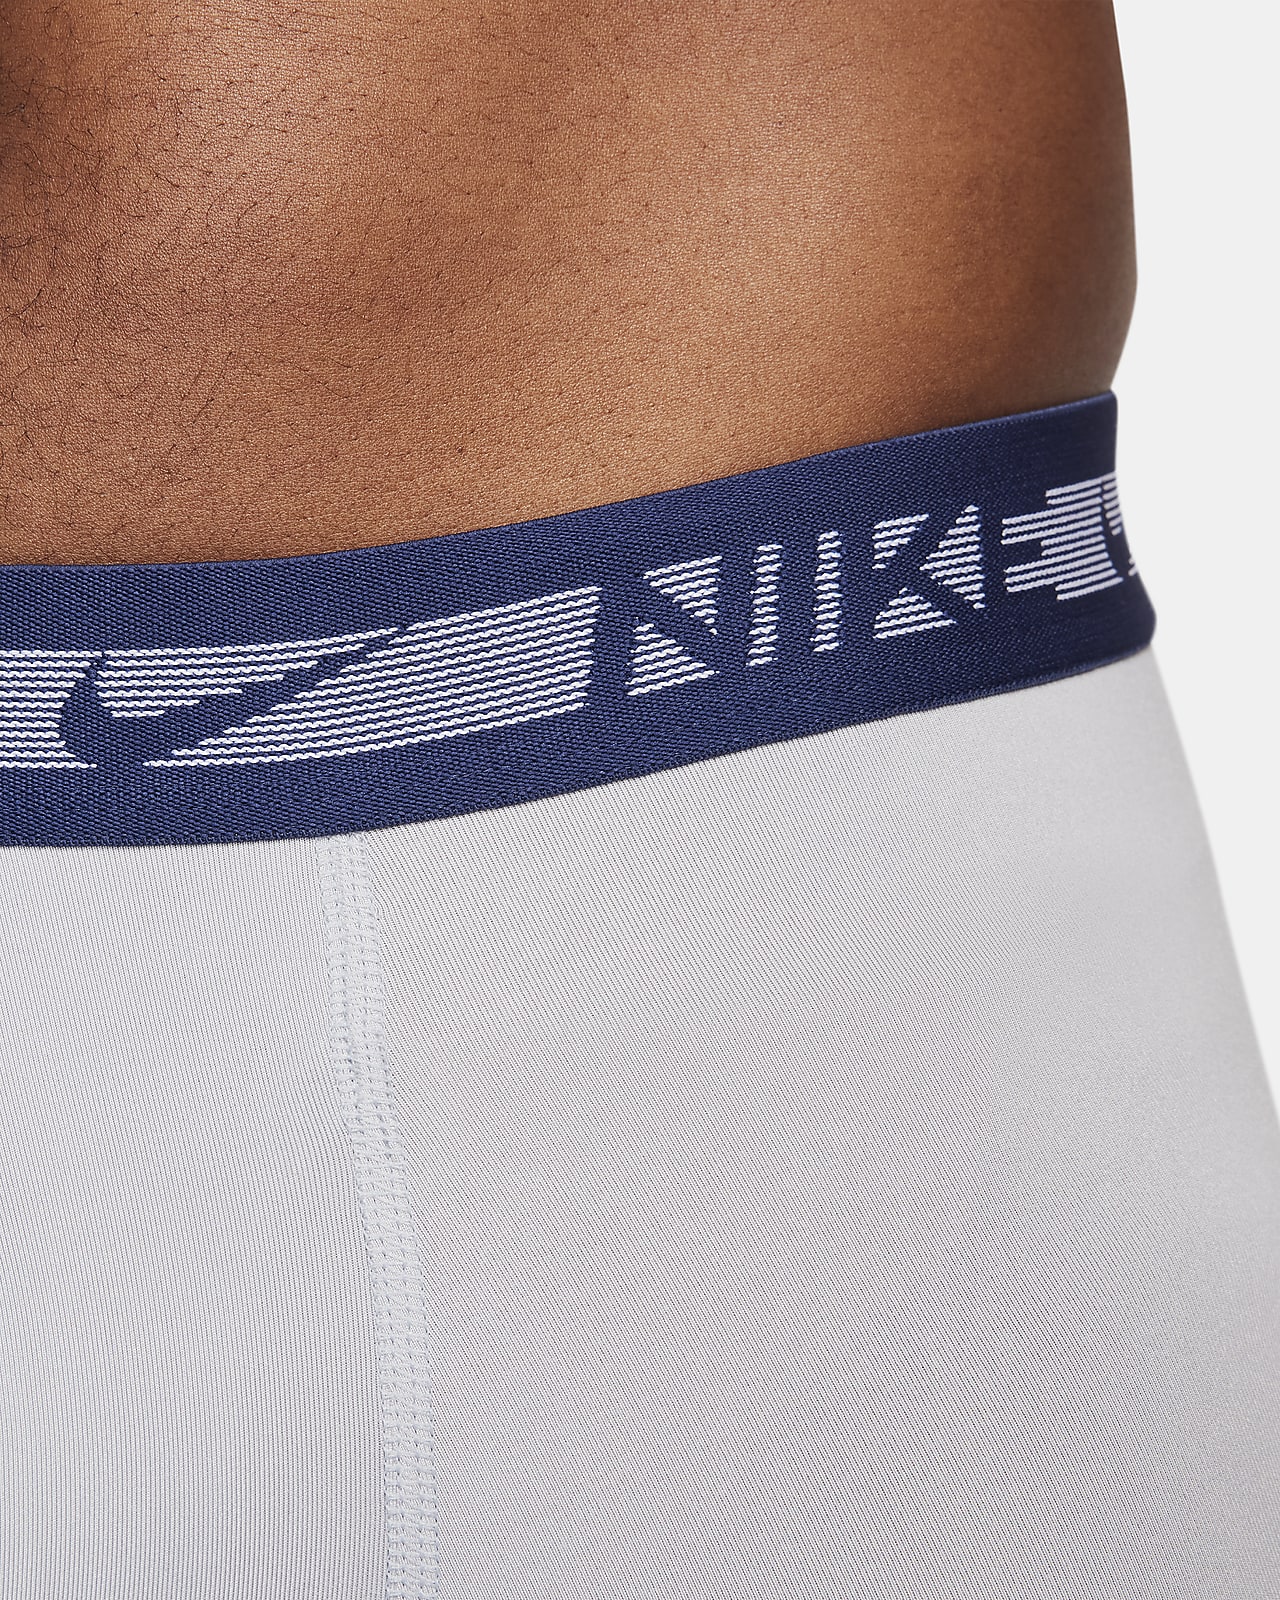 New Mens Nike Underwear - Gem